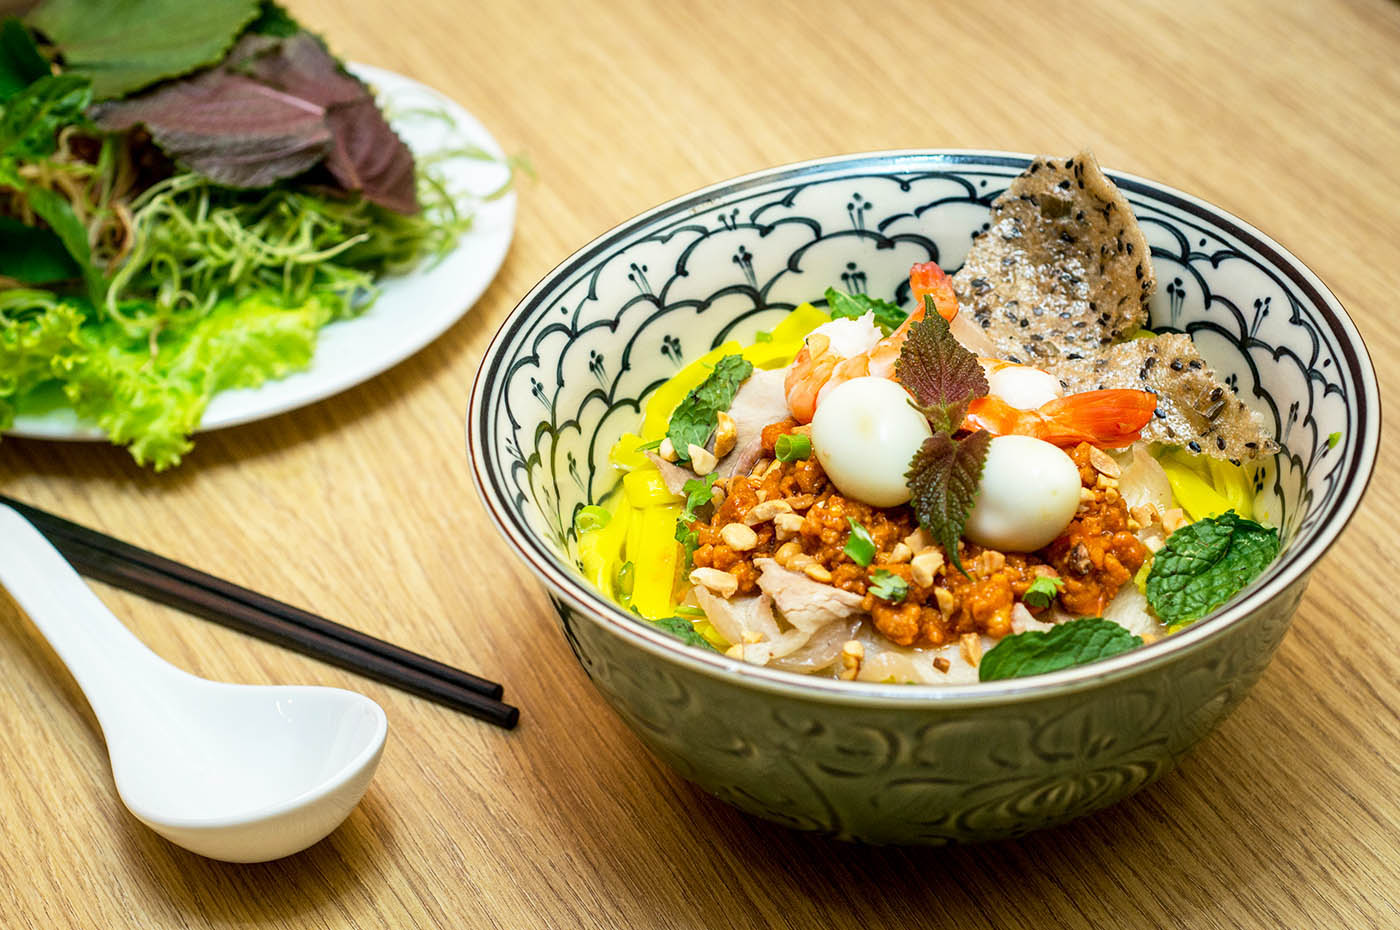 7 must-try foods in Da Nang